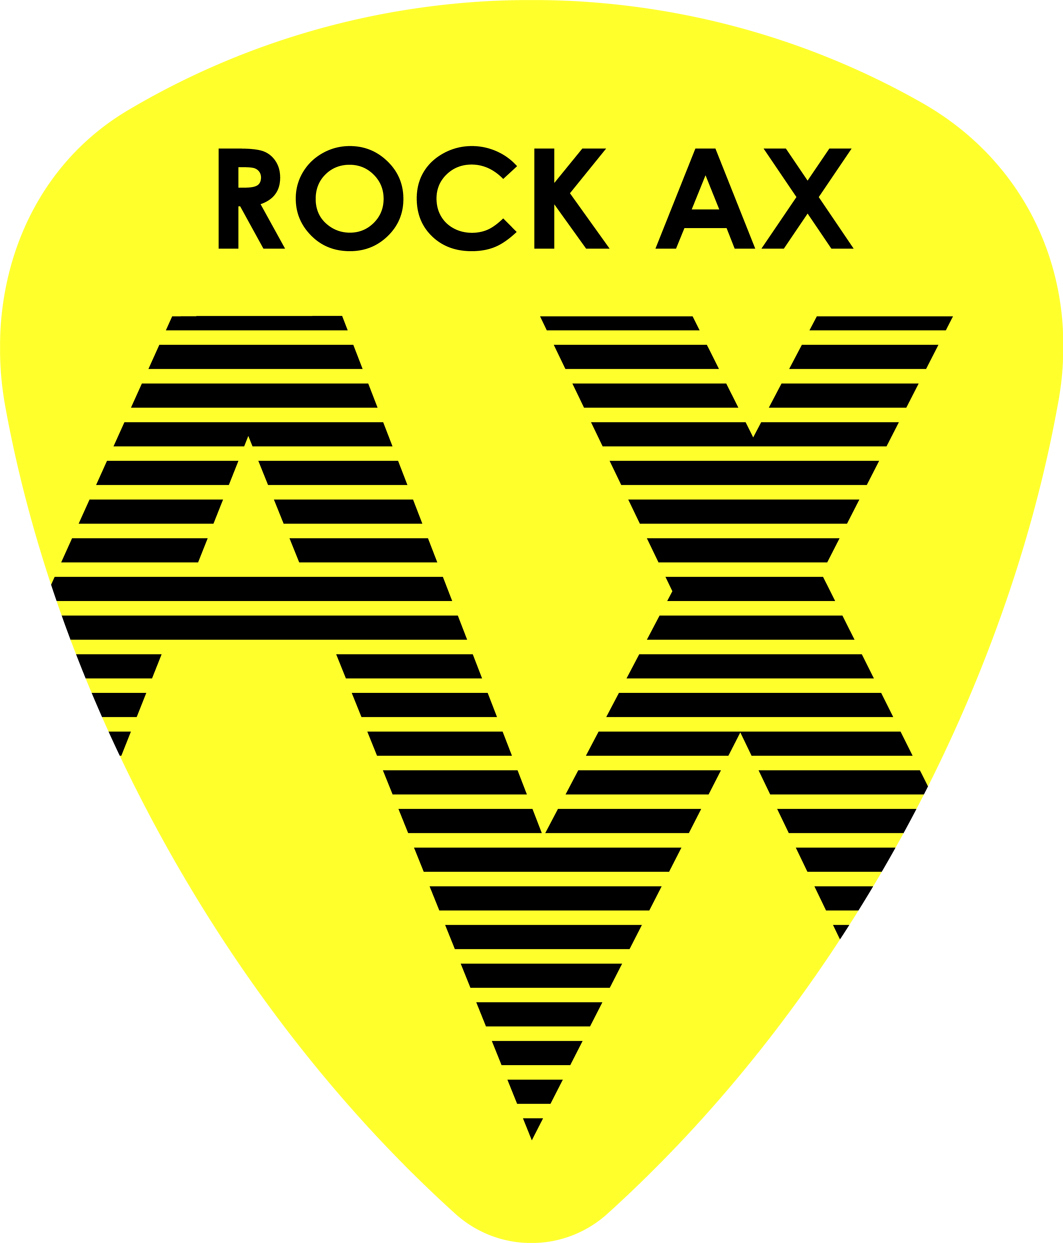 ROCK AX